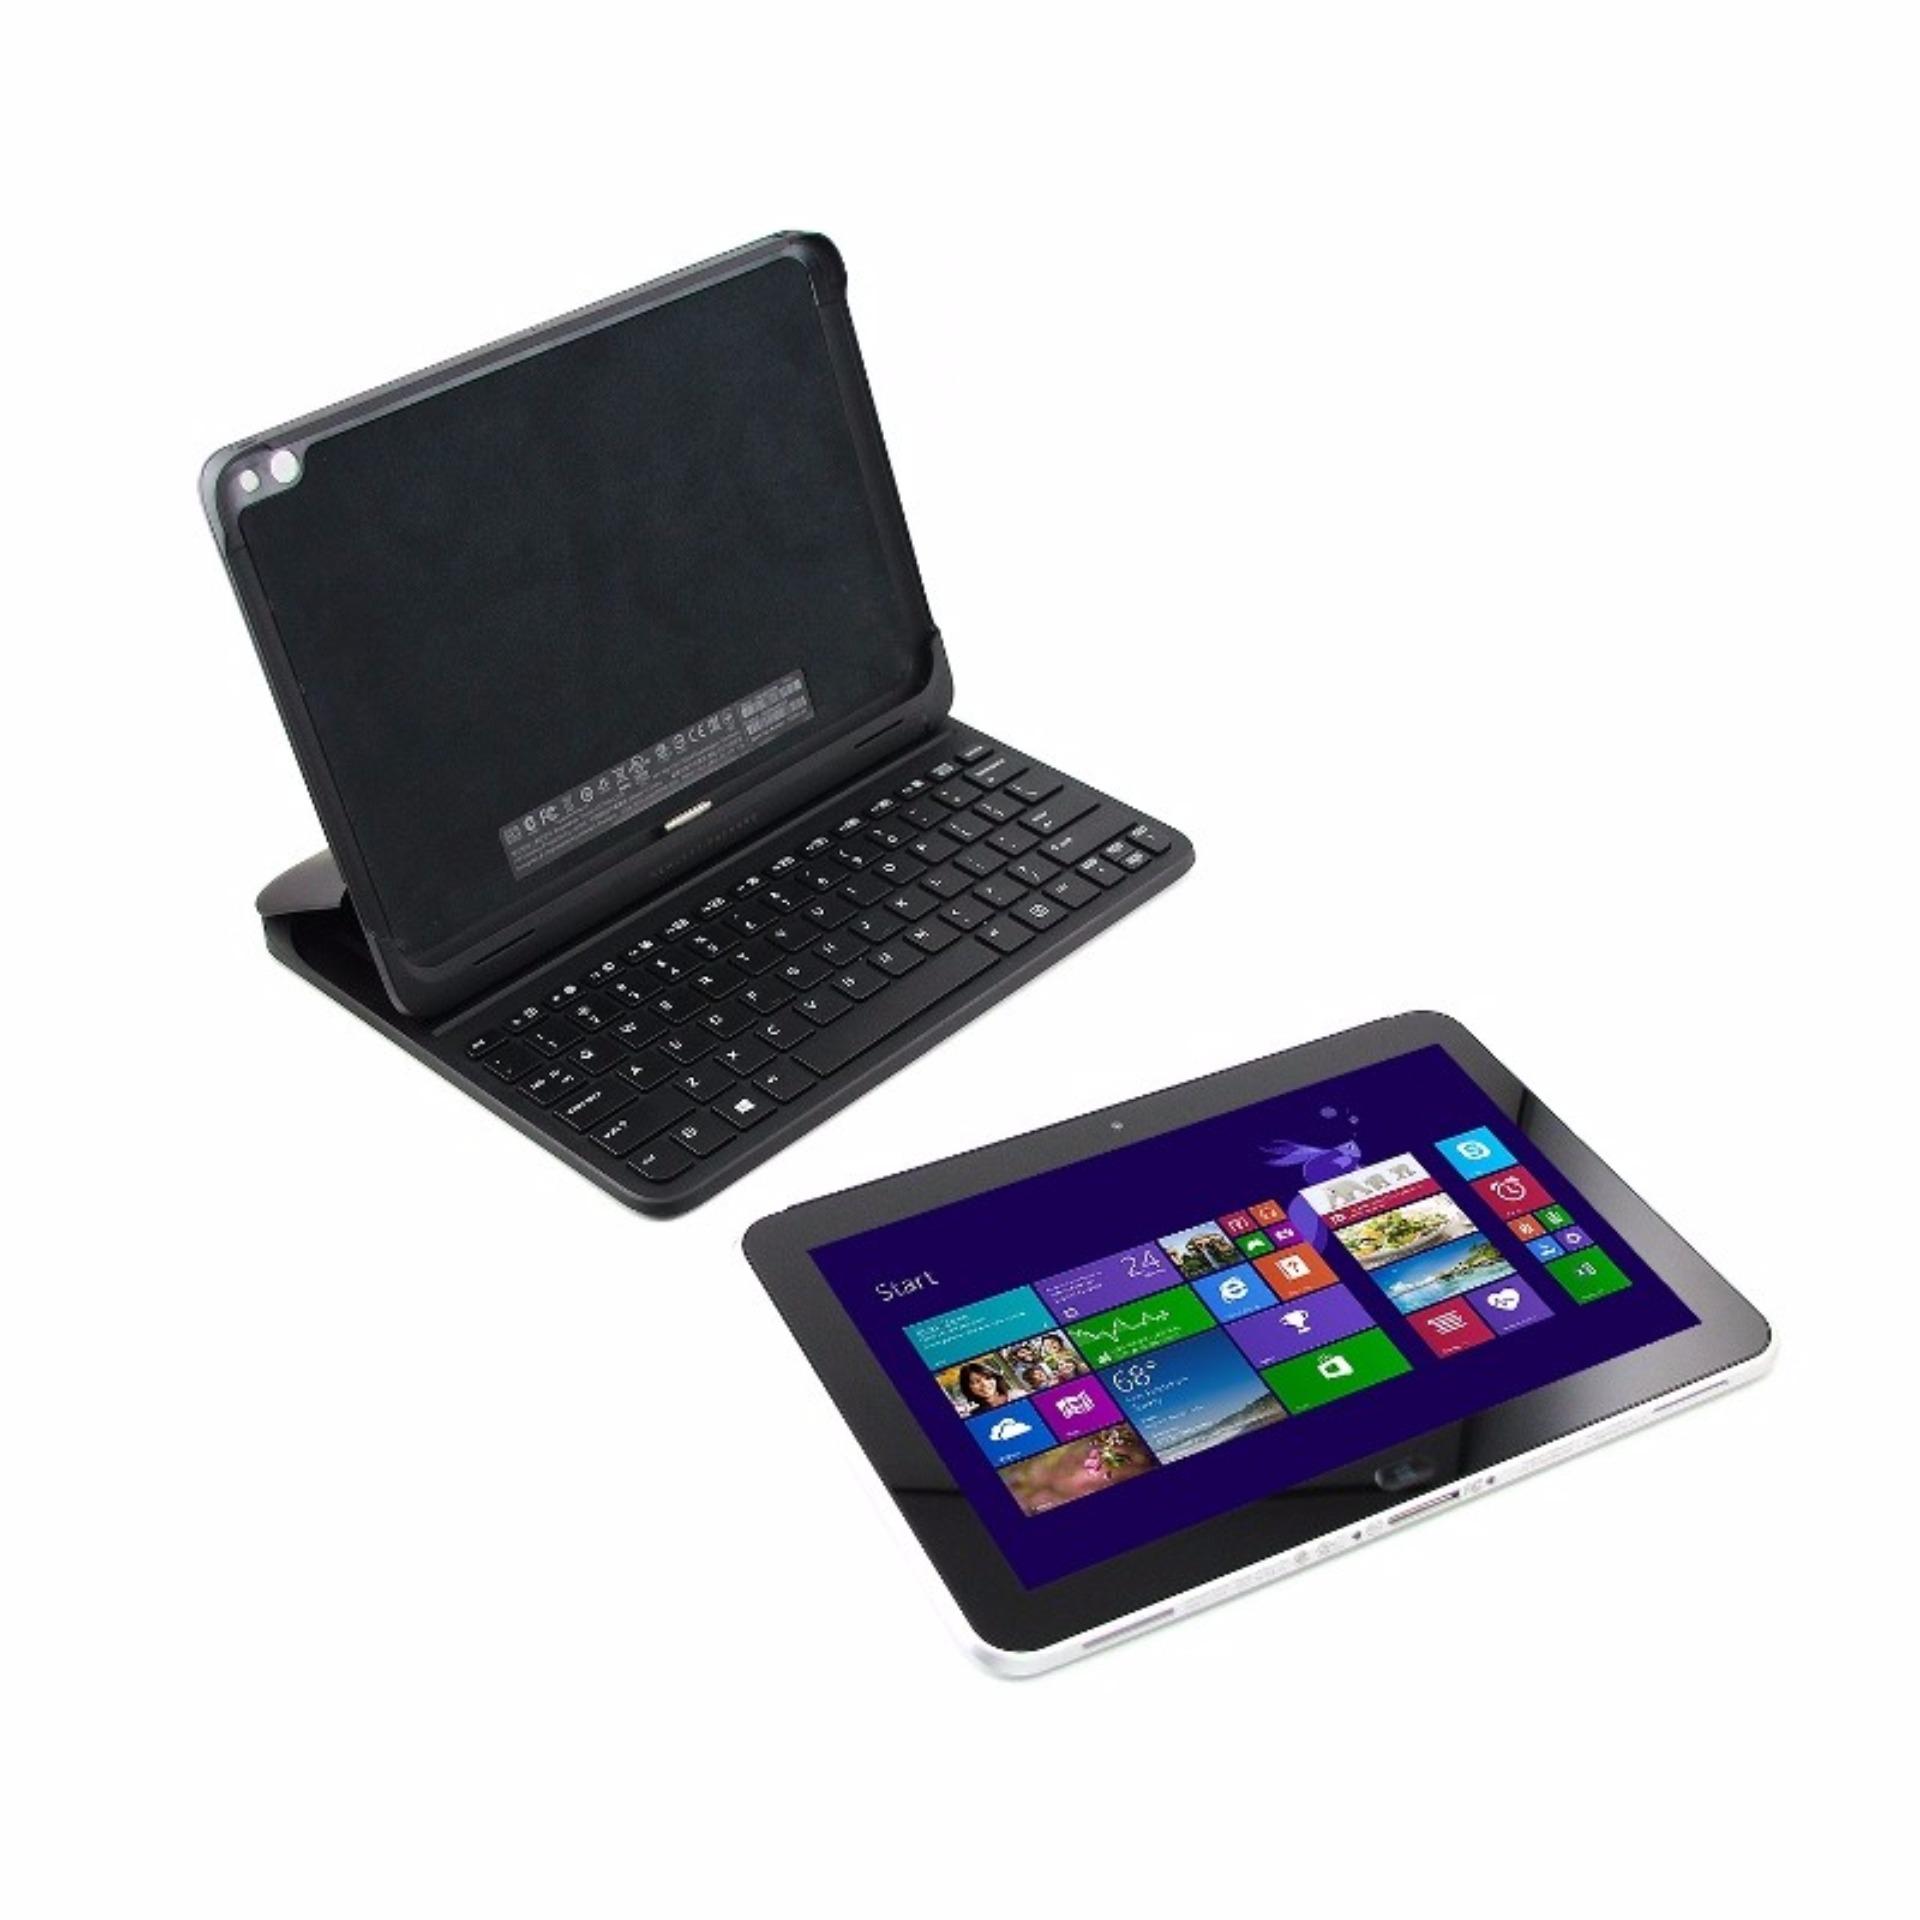 HP ElitePad 900 G1 - Laptop - tablet Windows 8.1 - Intel z2760 - Netbook 10\